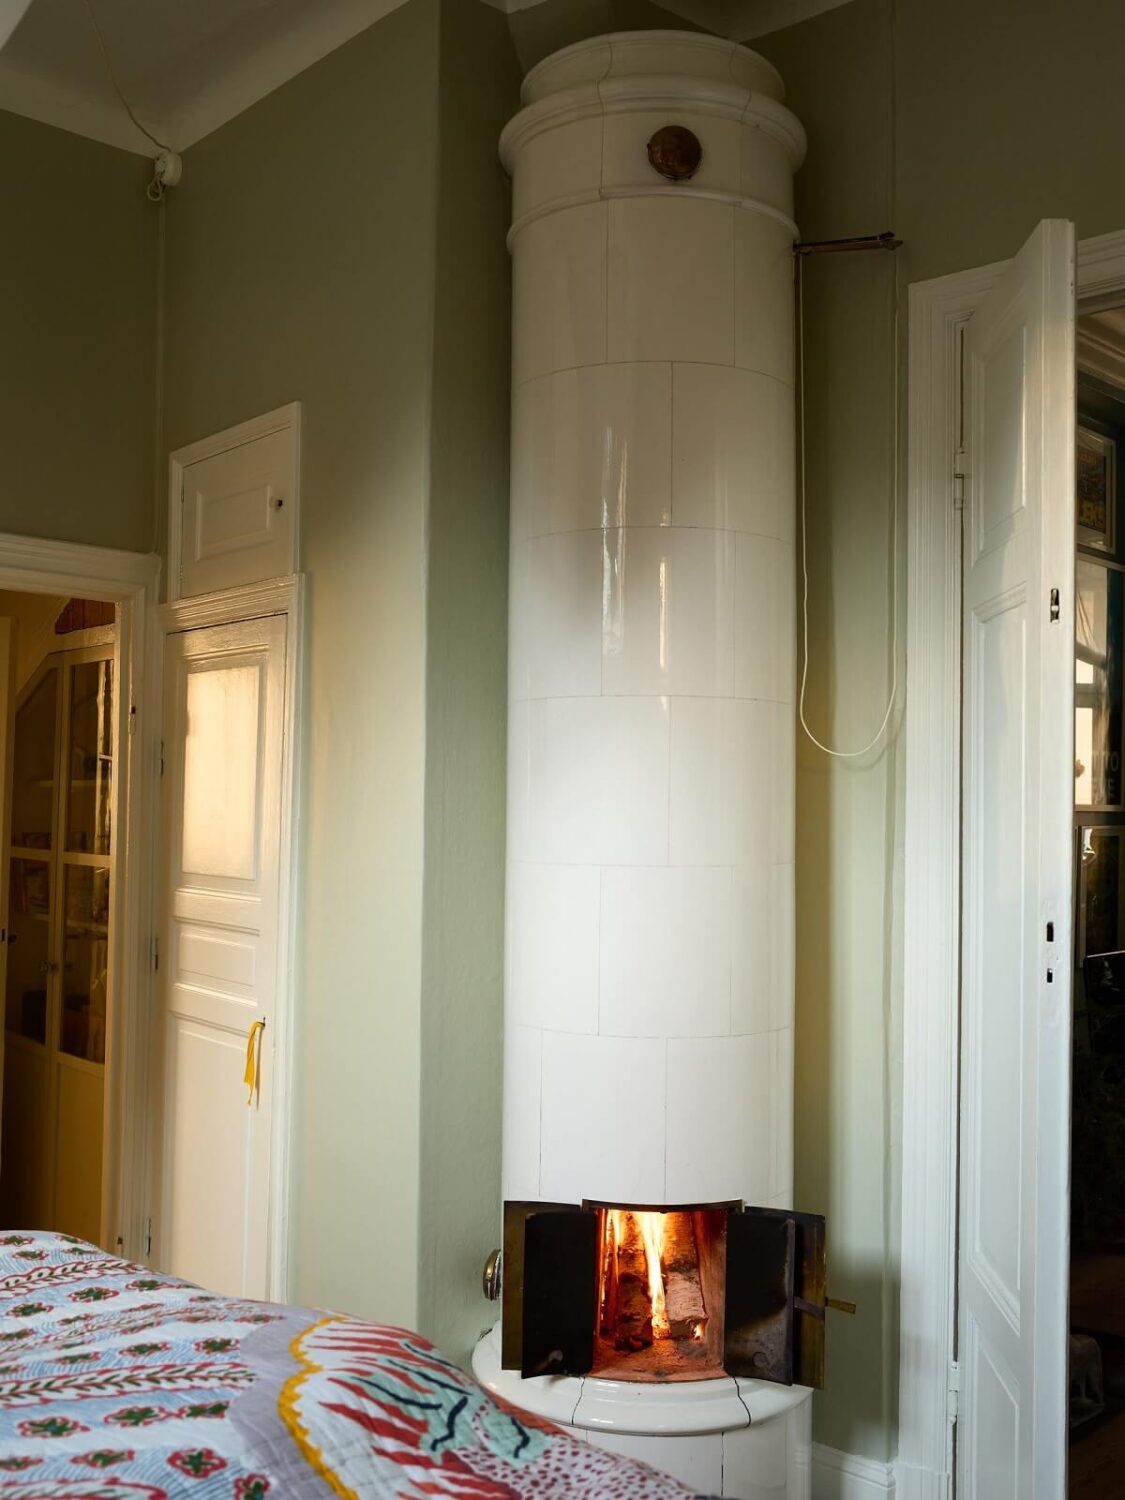 green-bedroom-kakelugn-swedish-fireplace-nordroom